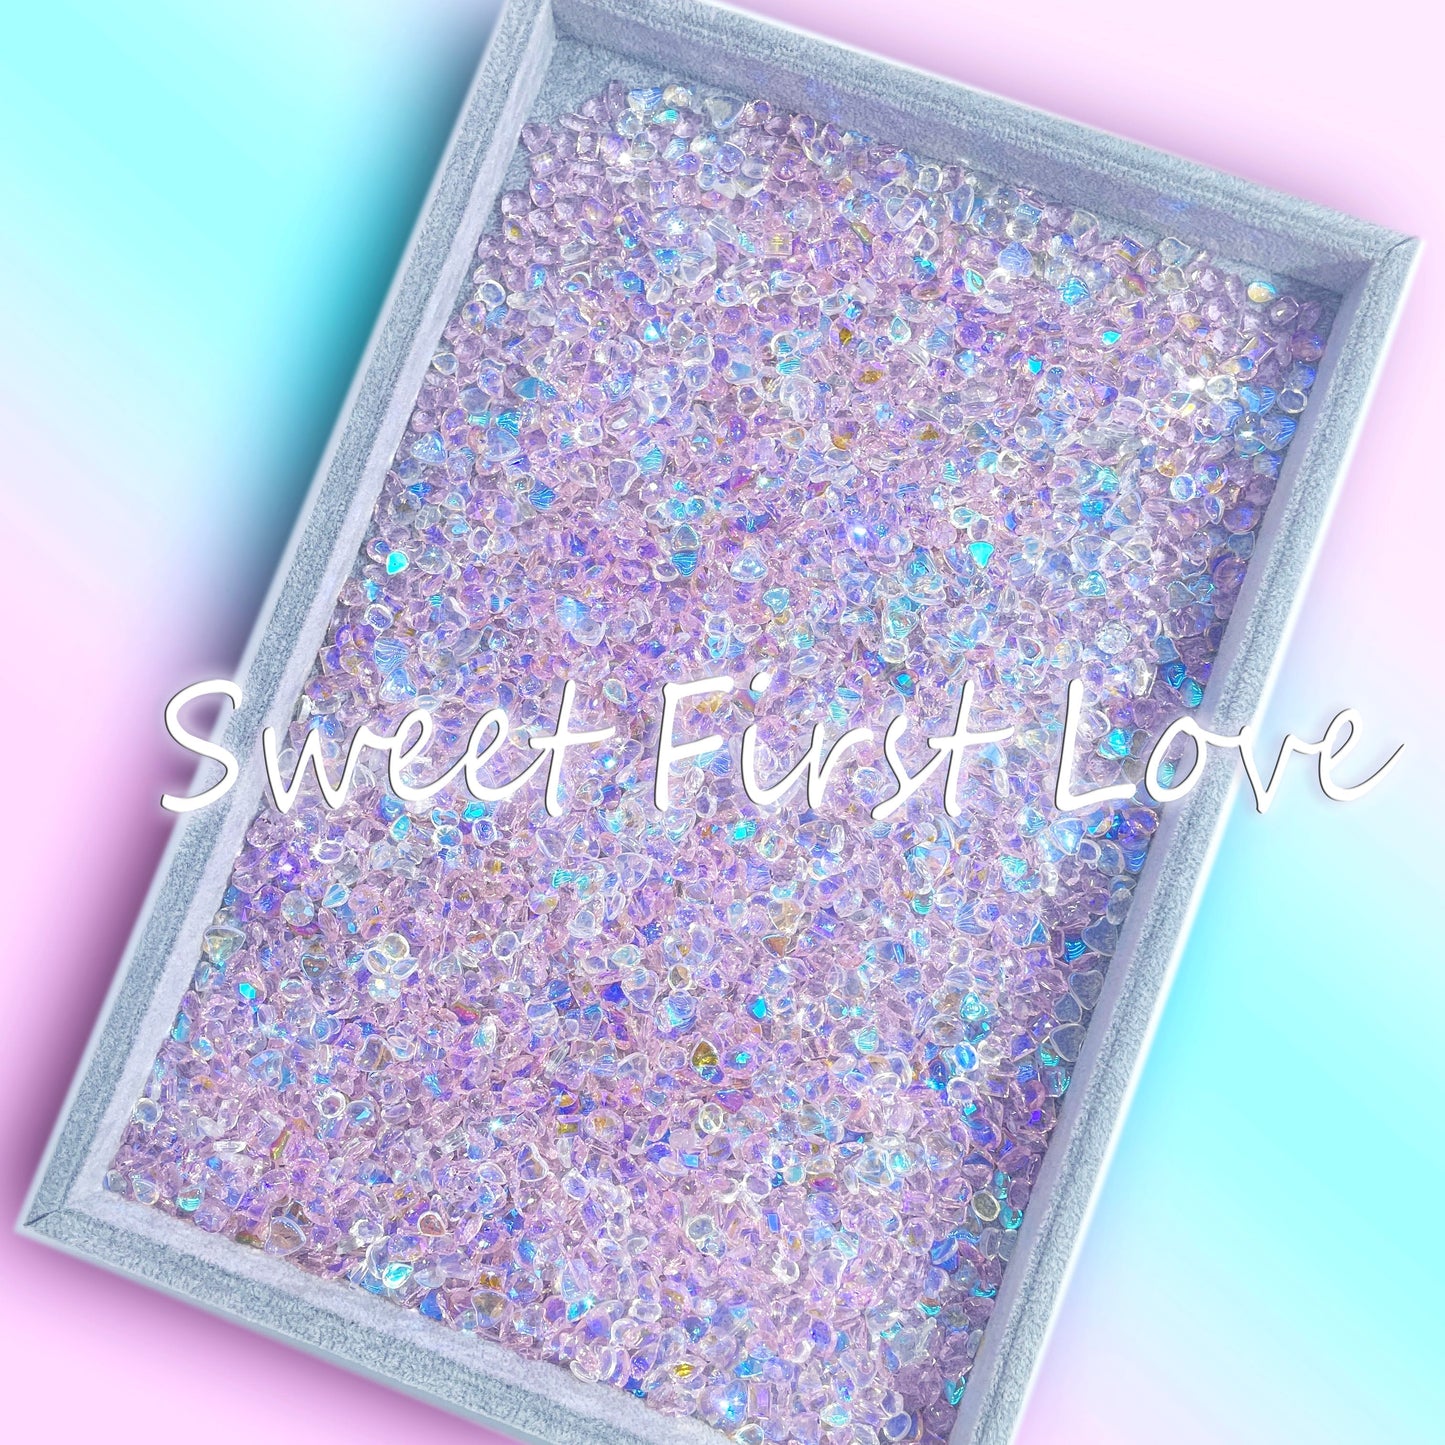 Sweet First Love Mix Diamond